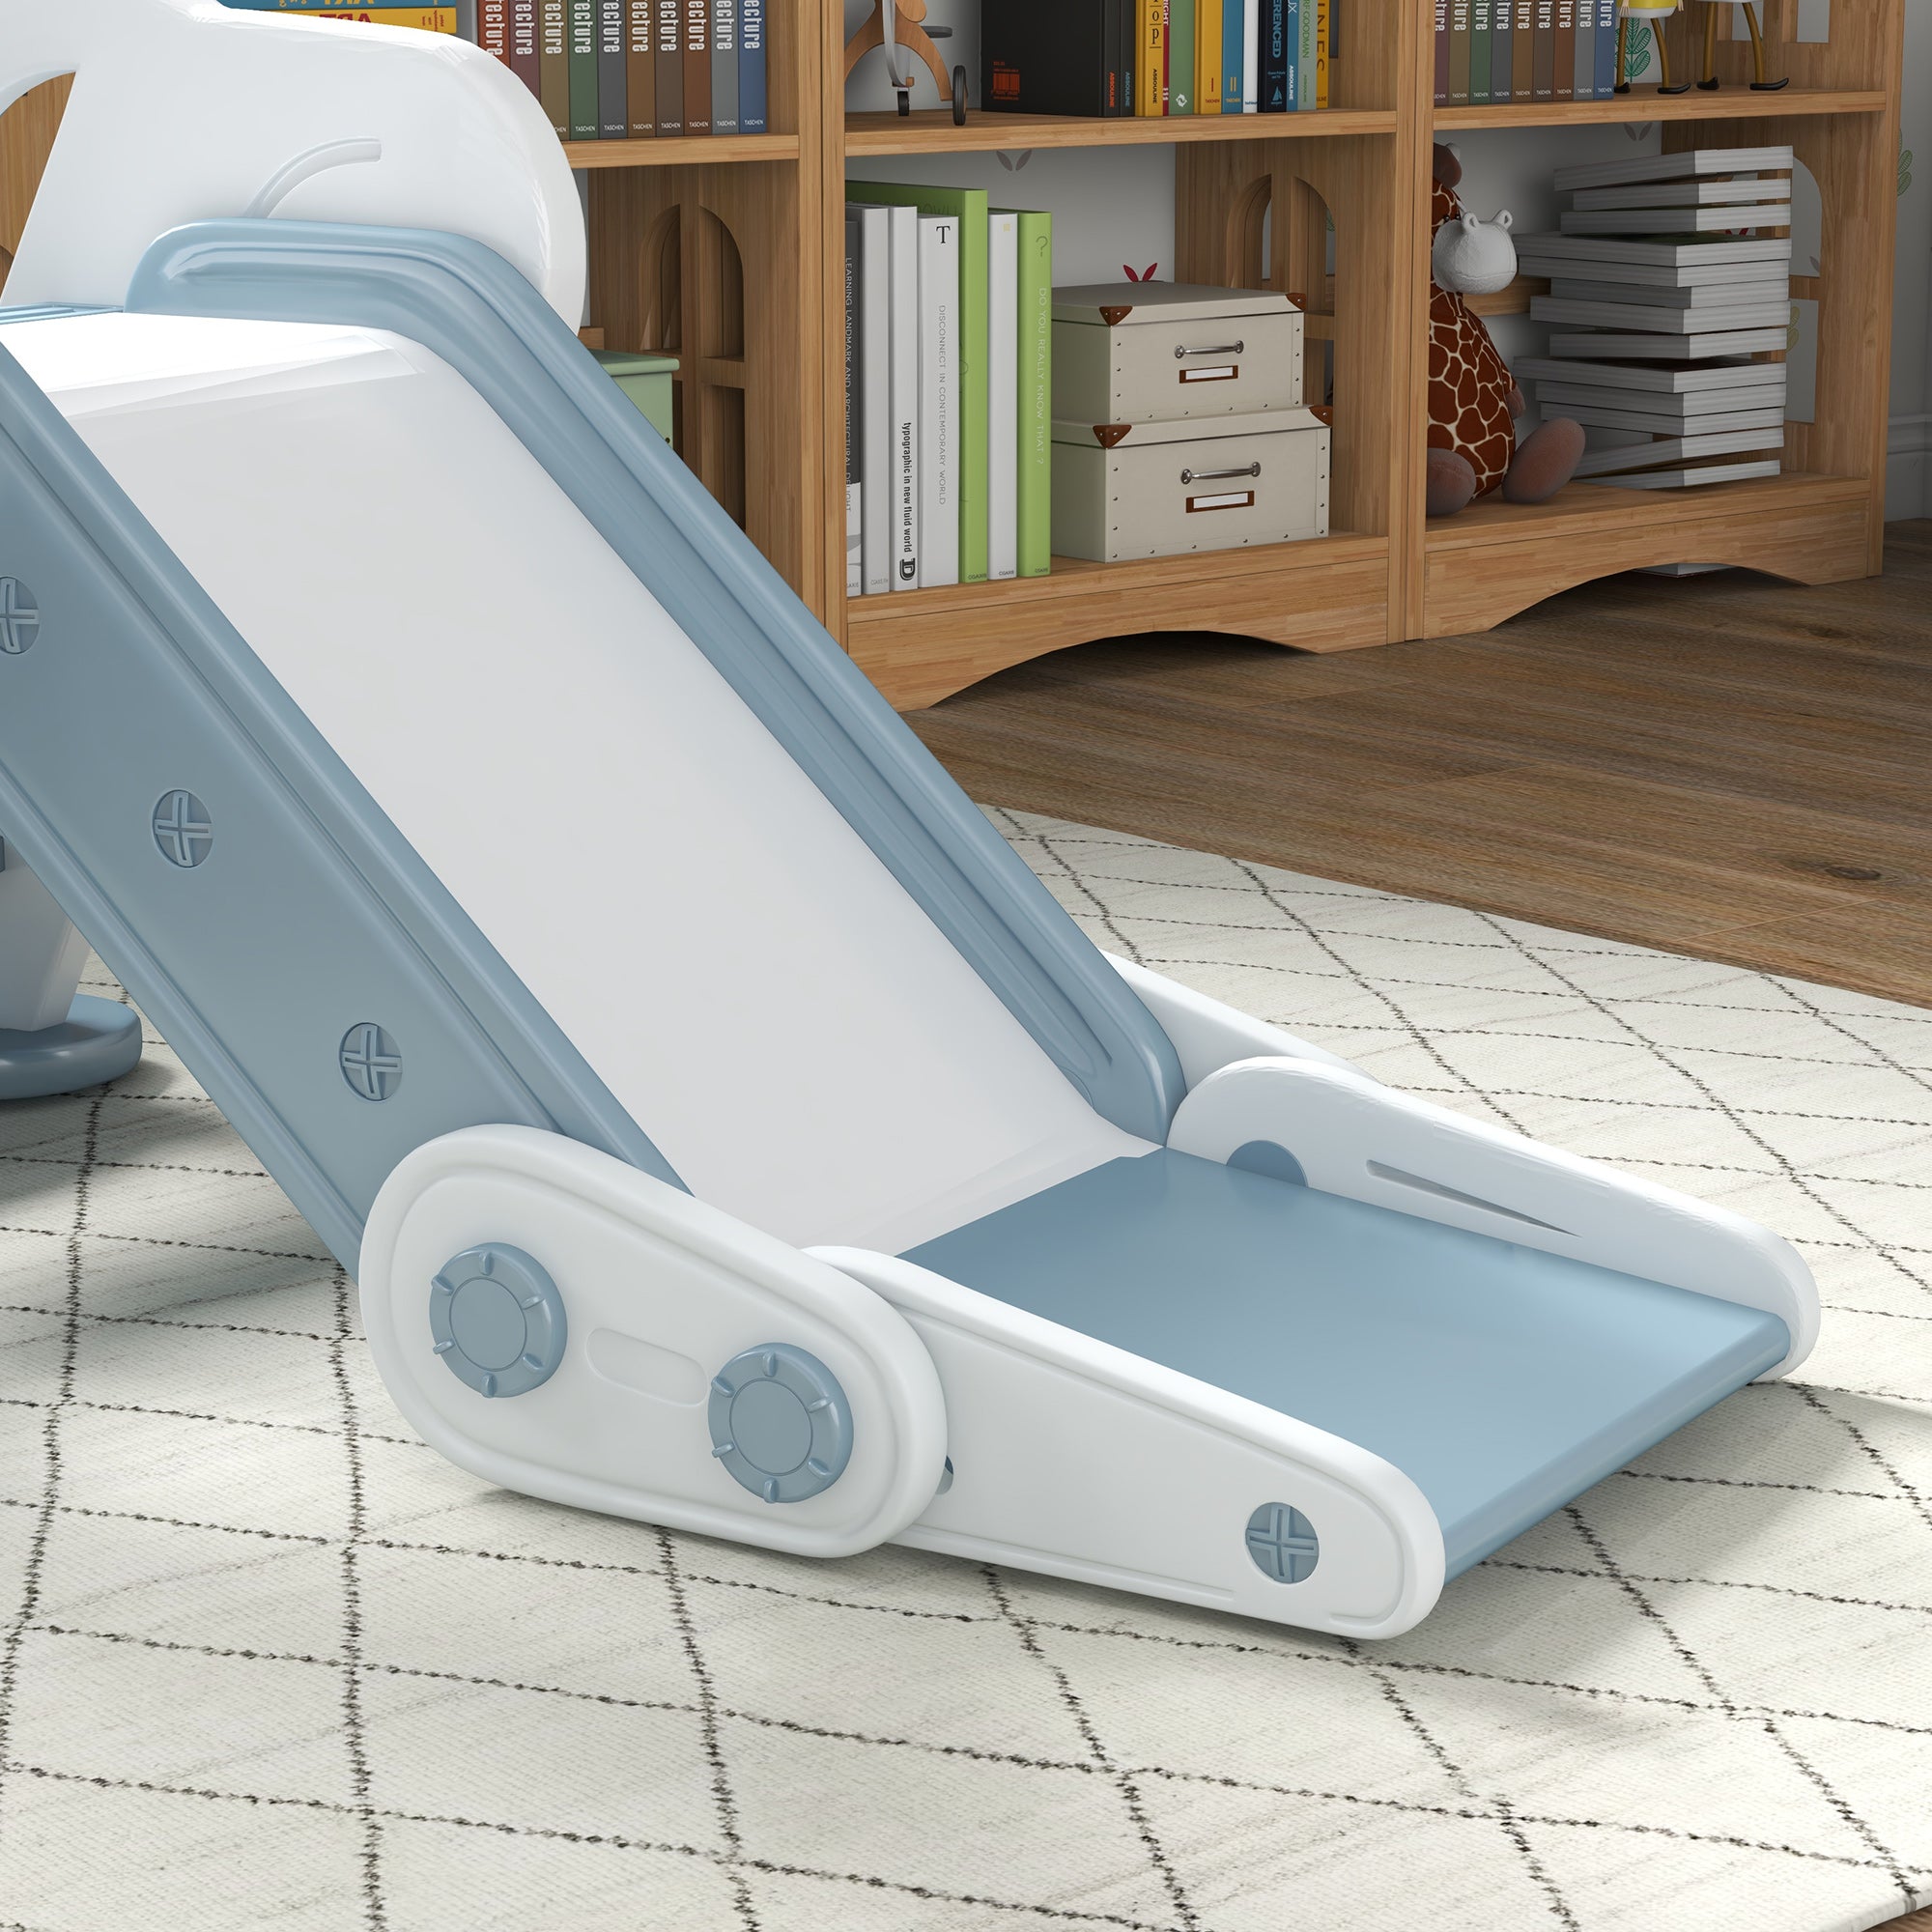 AIYAPLAY Foldable Kids Slide Indoor, Freestanding Baby Slide for 1.5-3 Years Old, Grey